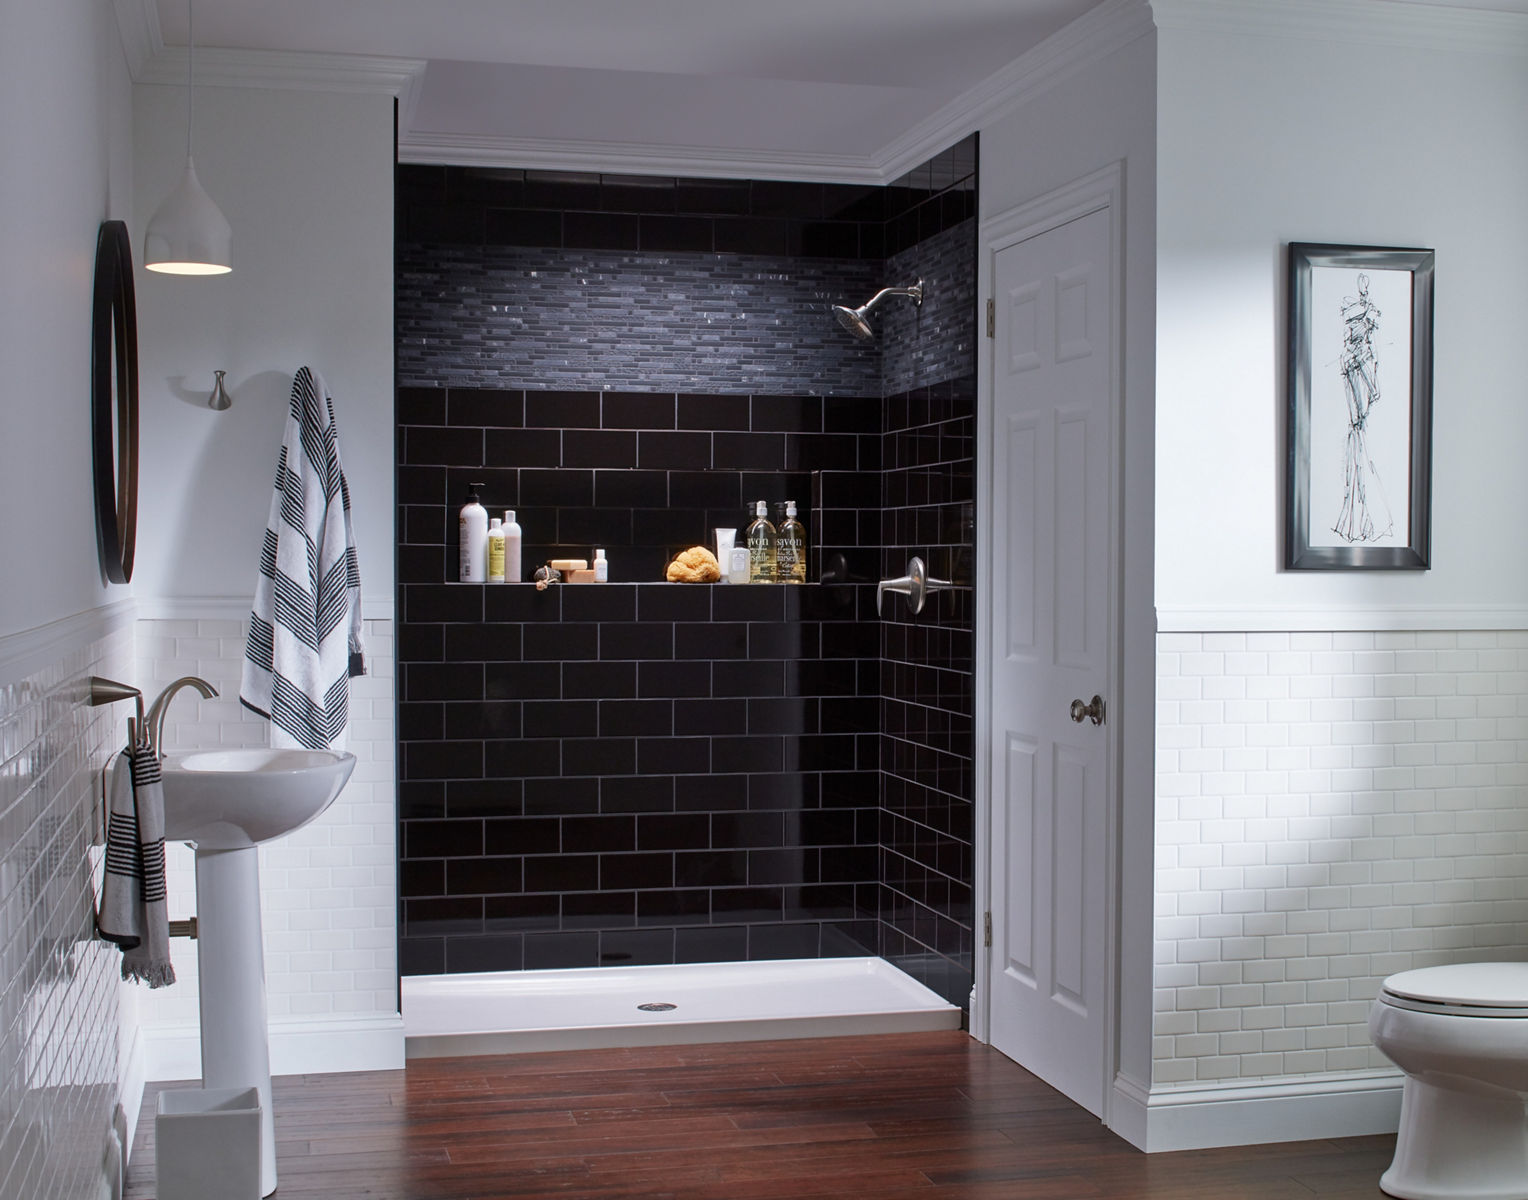 A white shower base and black tile walls.